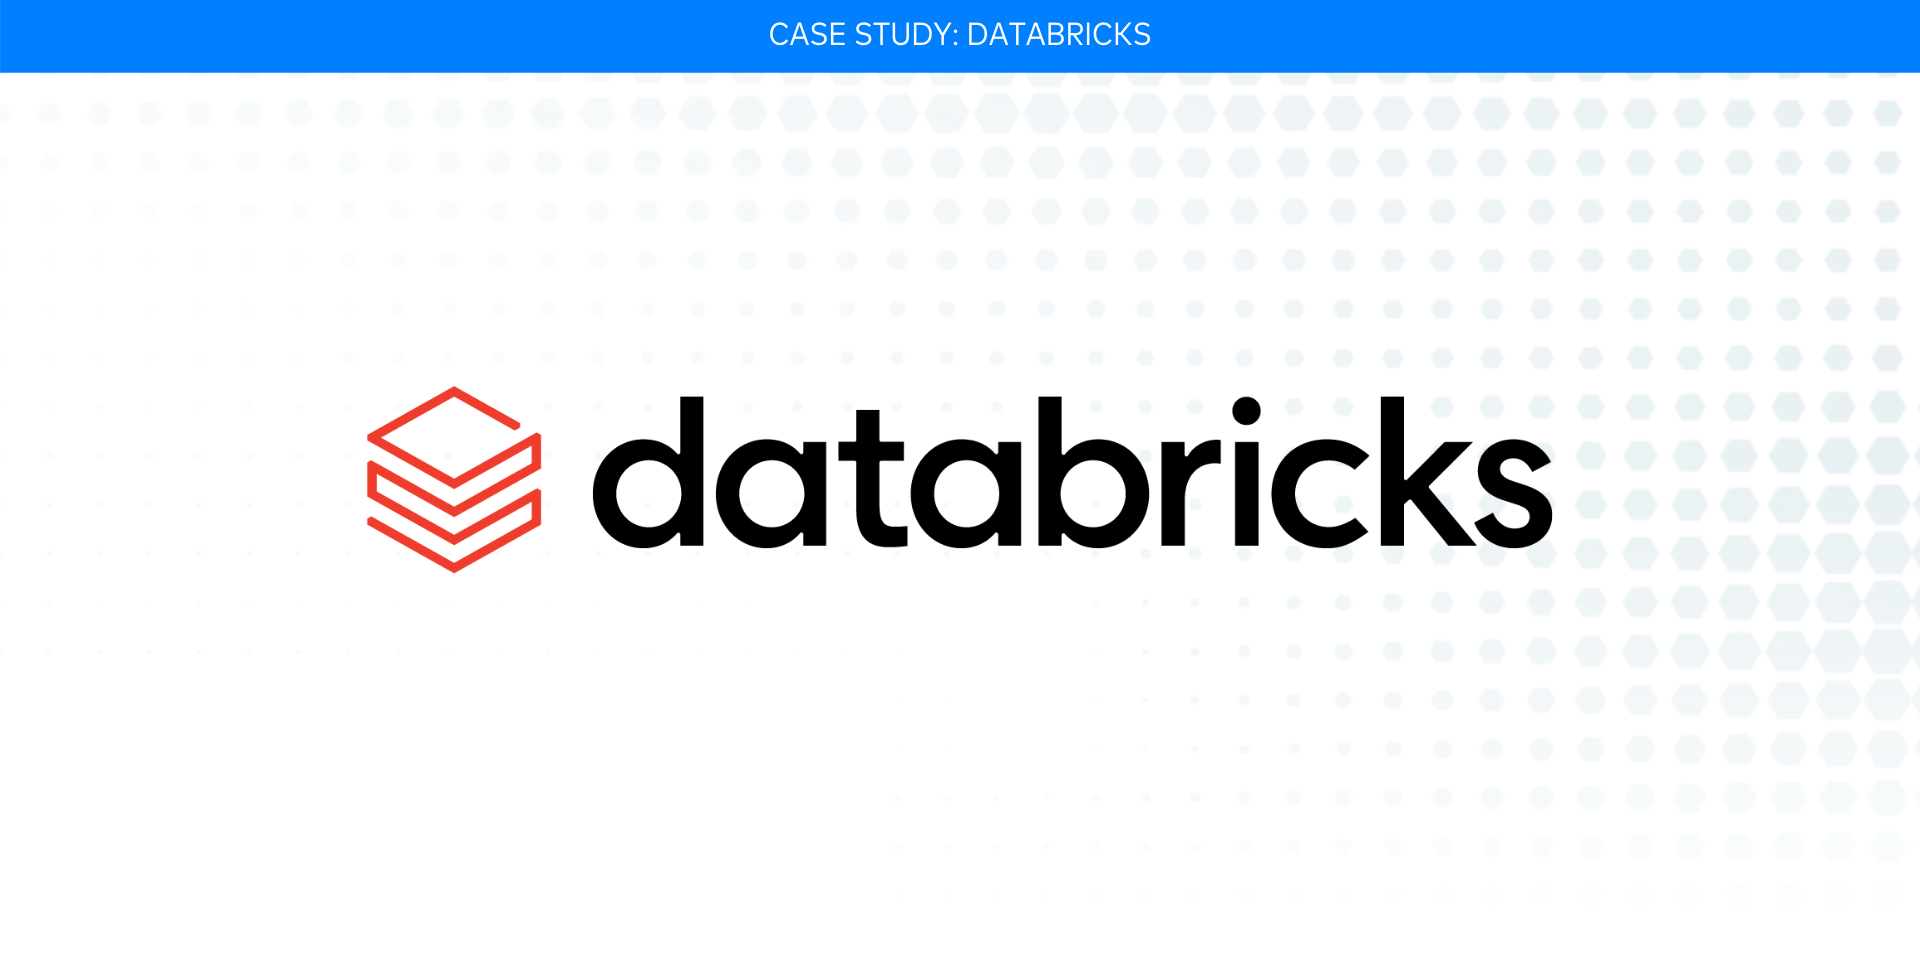 The secret sauce behind Databricks’ marketing analytics growth